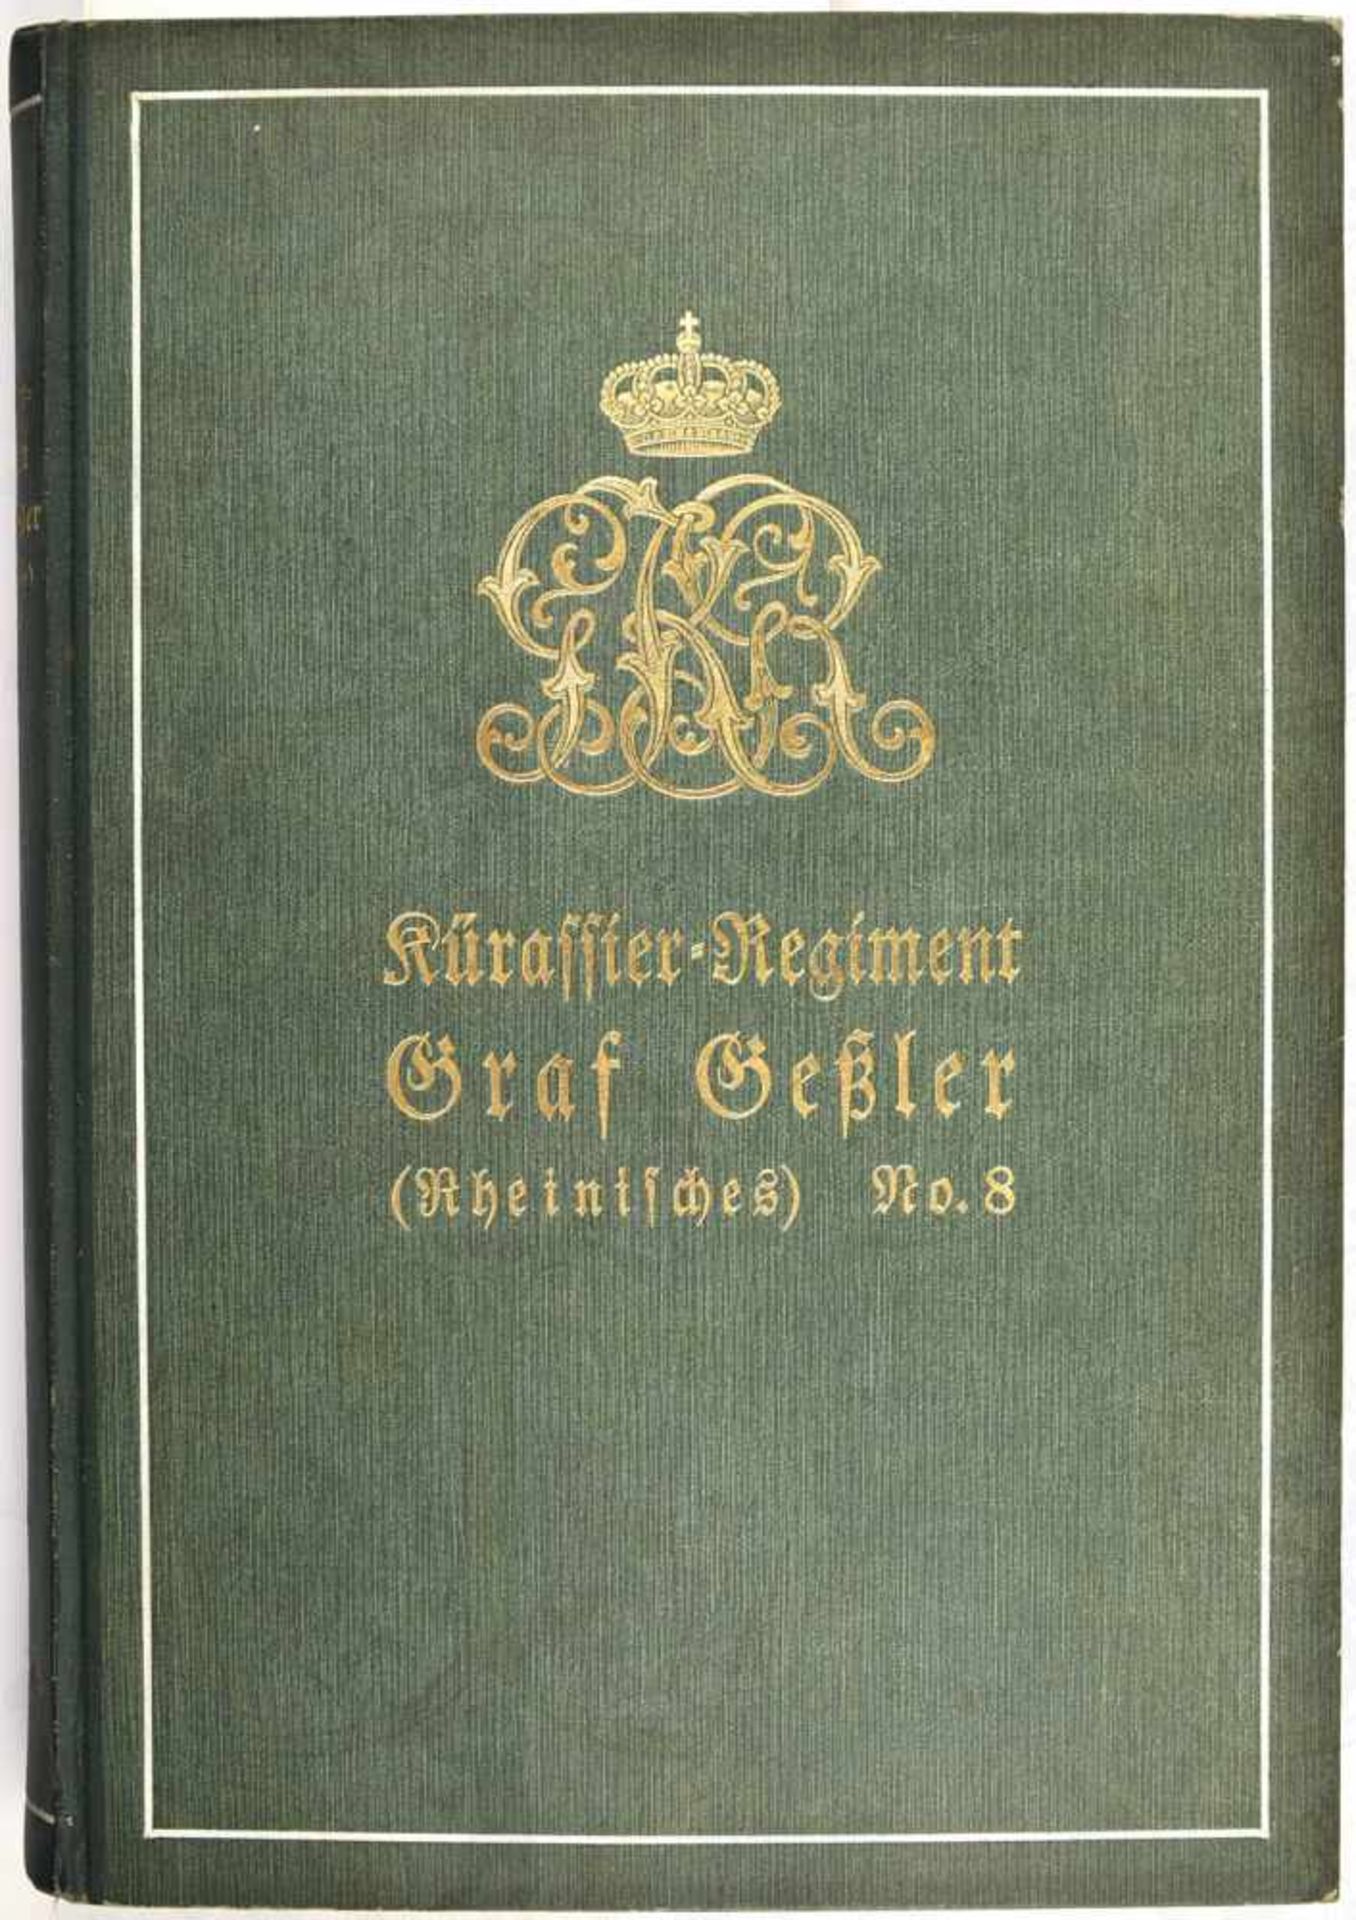 KÜRASSIER-REGIMENT GRAF GEßLER (RHEINISCHES) NR. 8, Bln. 1910, zahlr. Fotos, 3 farb.